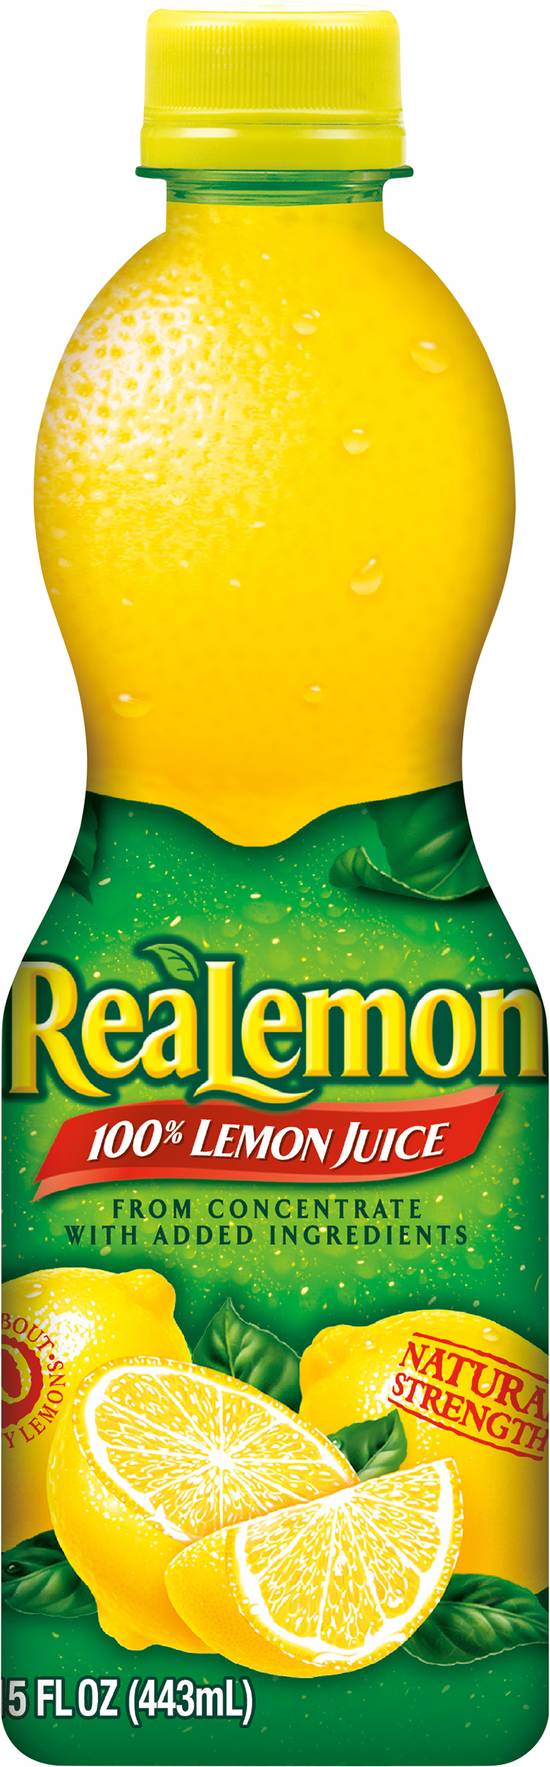 Realemon 100% Lemon Juice (15 fl oz)